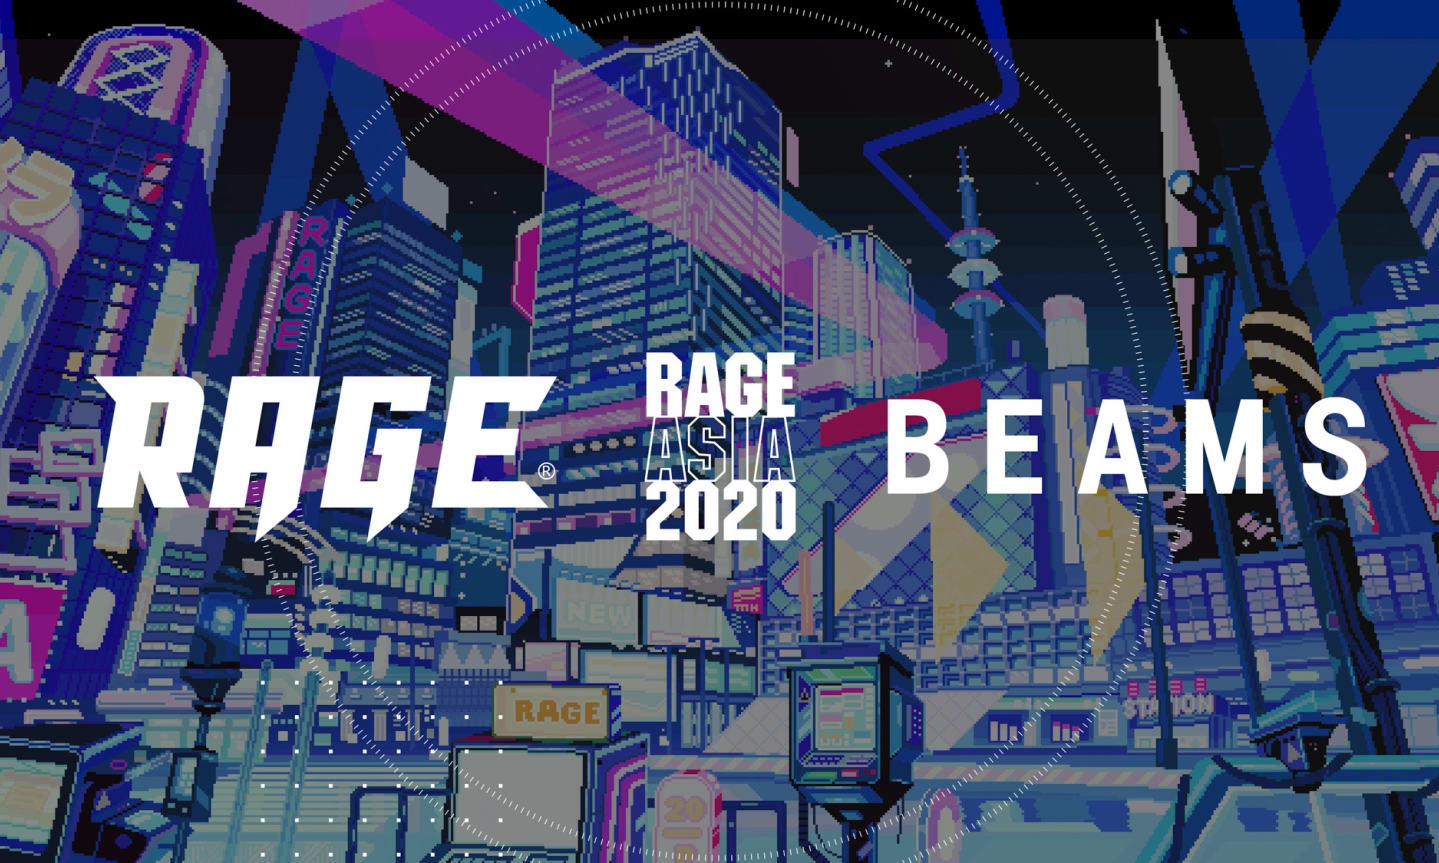 BEAMS 为 RAGE ASIA 2020 电竞大会打造别注合作系列